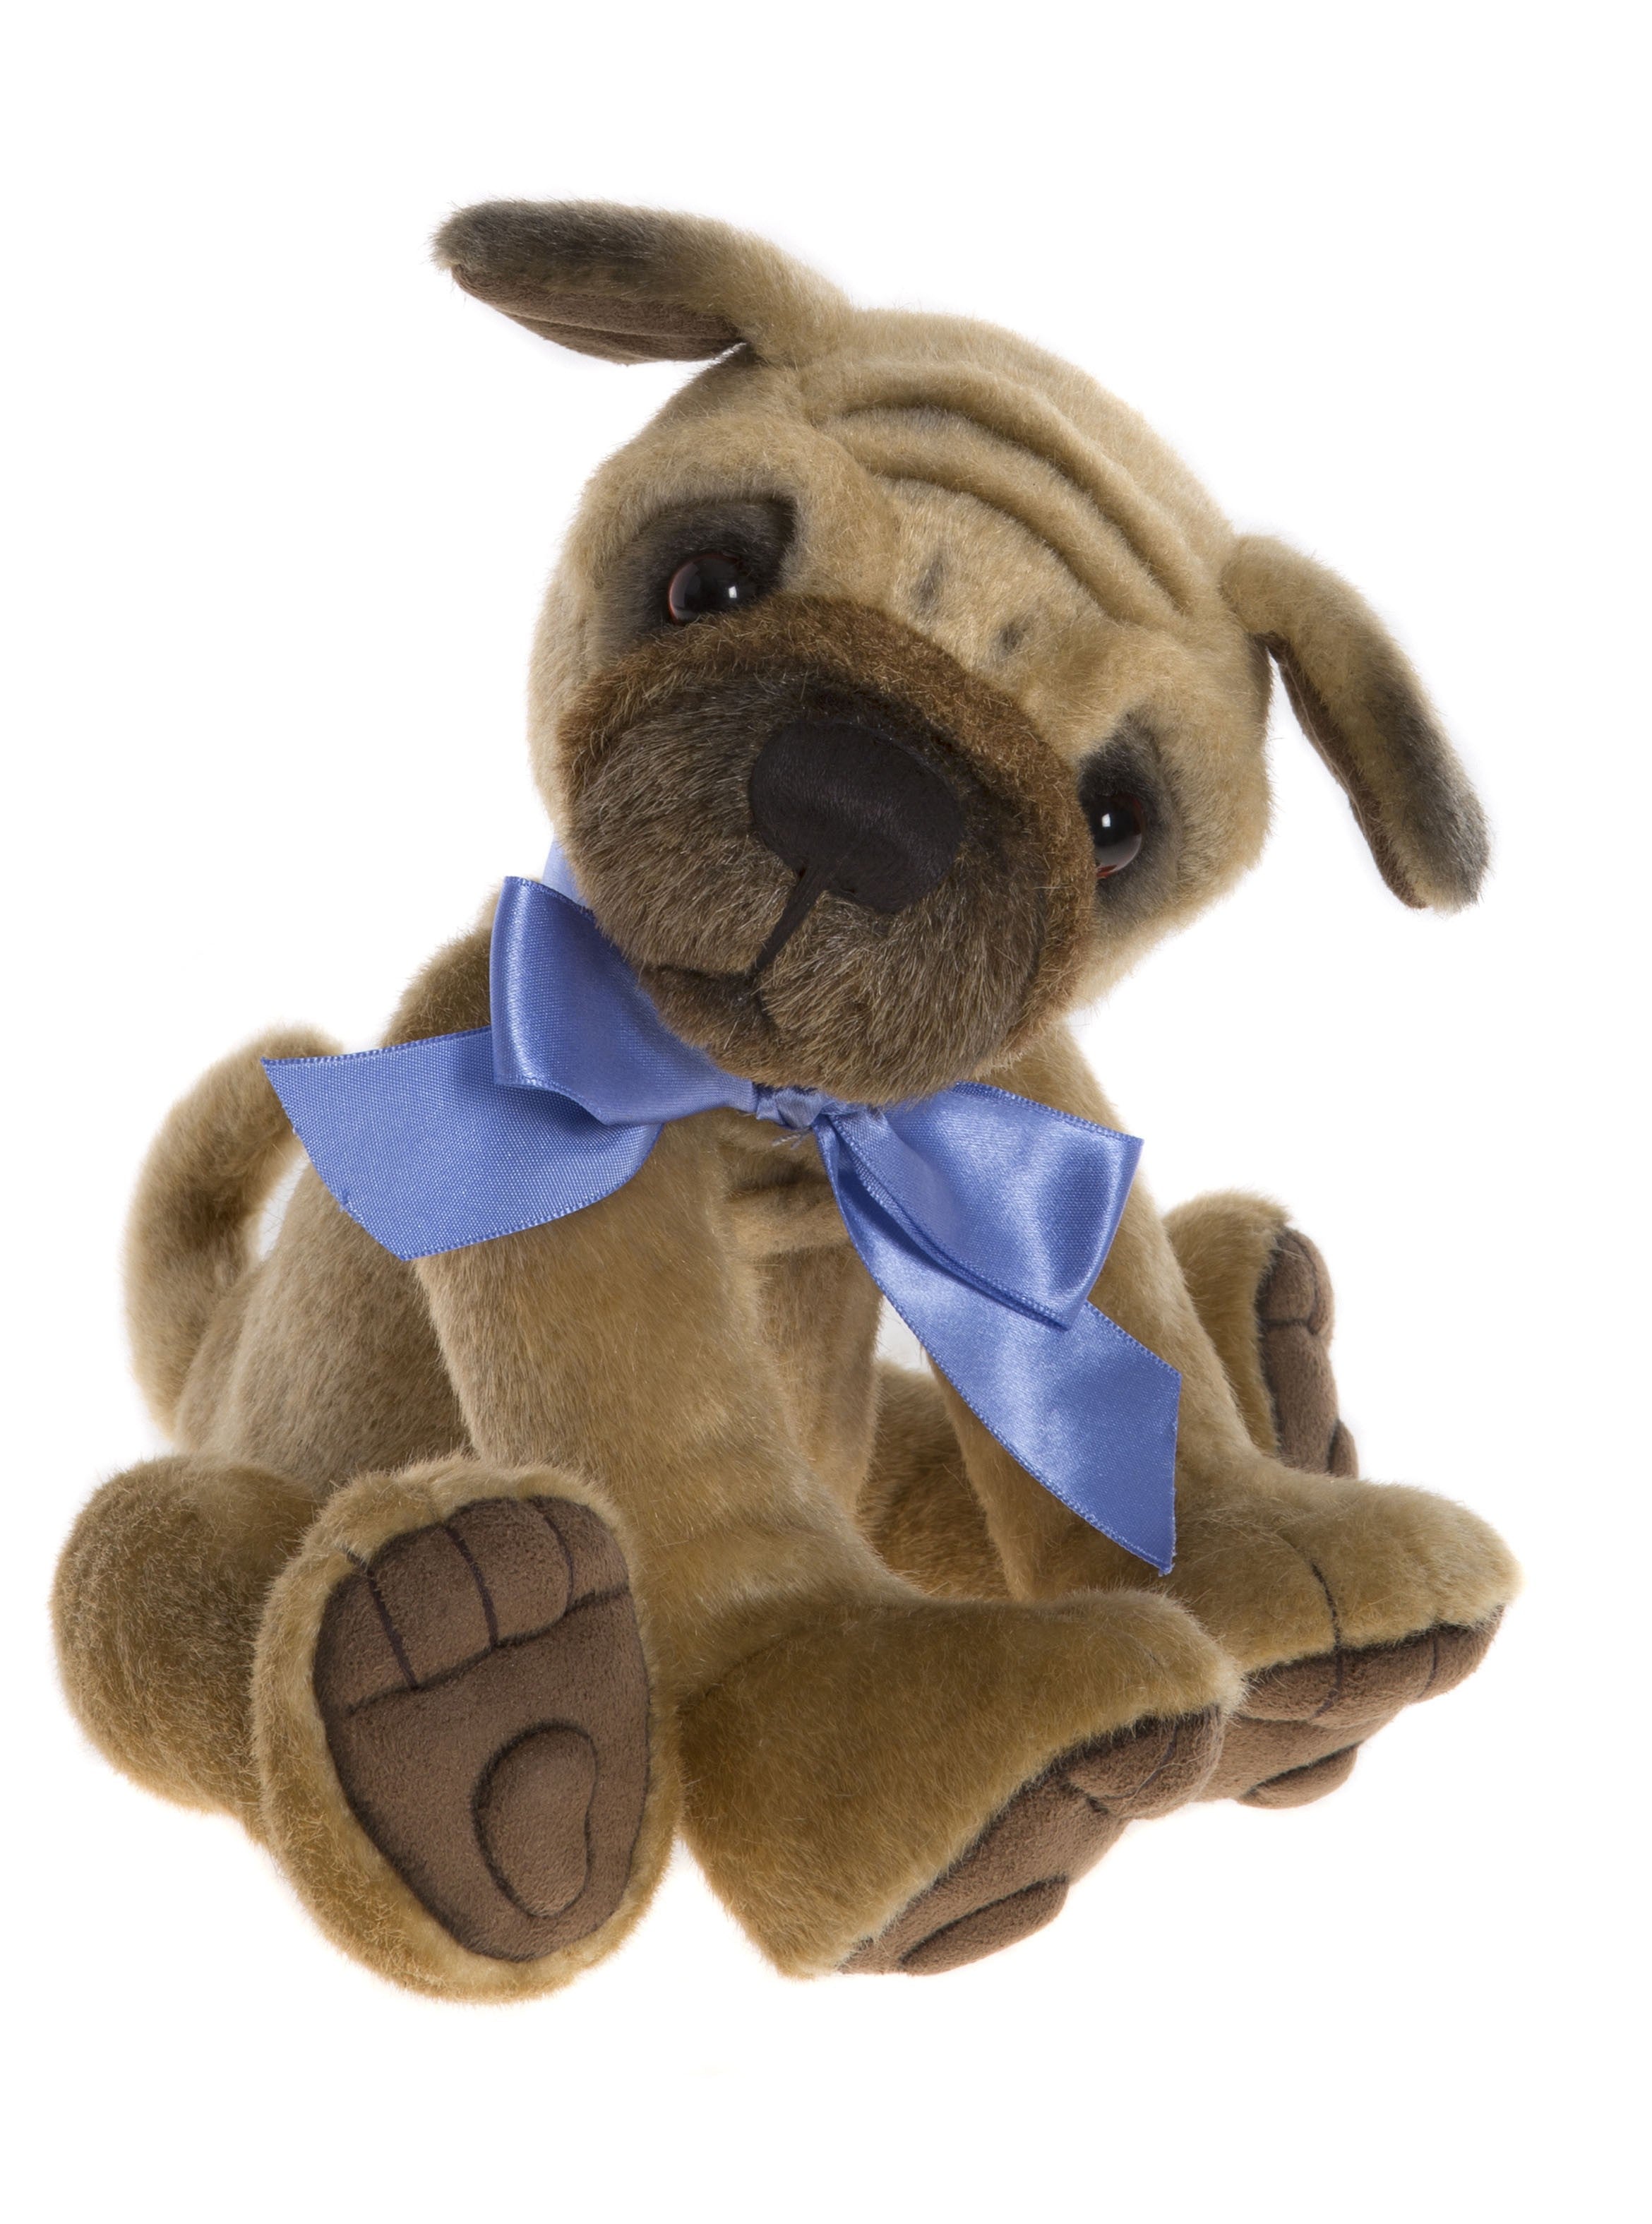 pug puppy stuffed animal